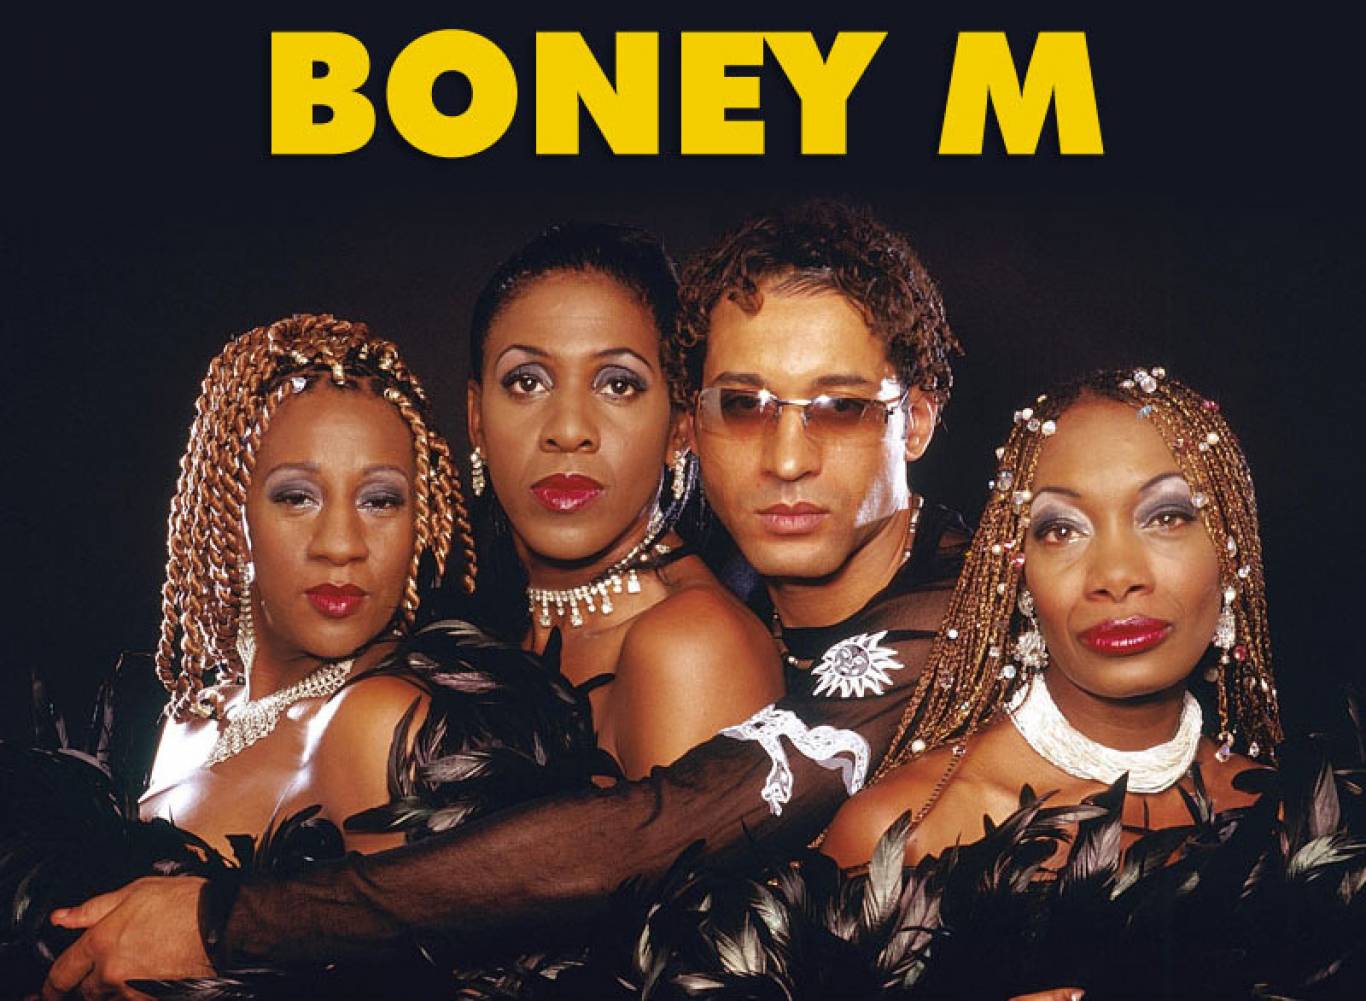 Boney m на русском. Группа Boney m. 80х. Лиз Митчелл Boney m. Лиз Митчелл Бони м в молодости. Группа Бони м 1976.